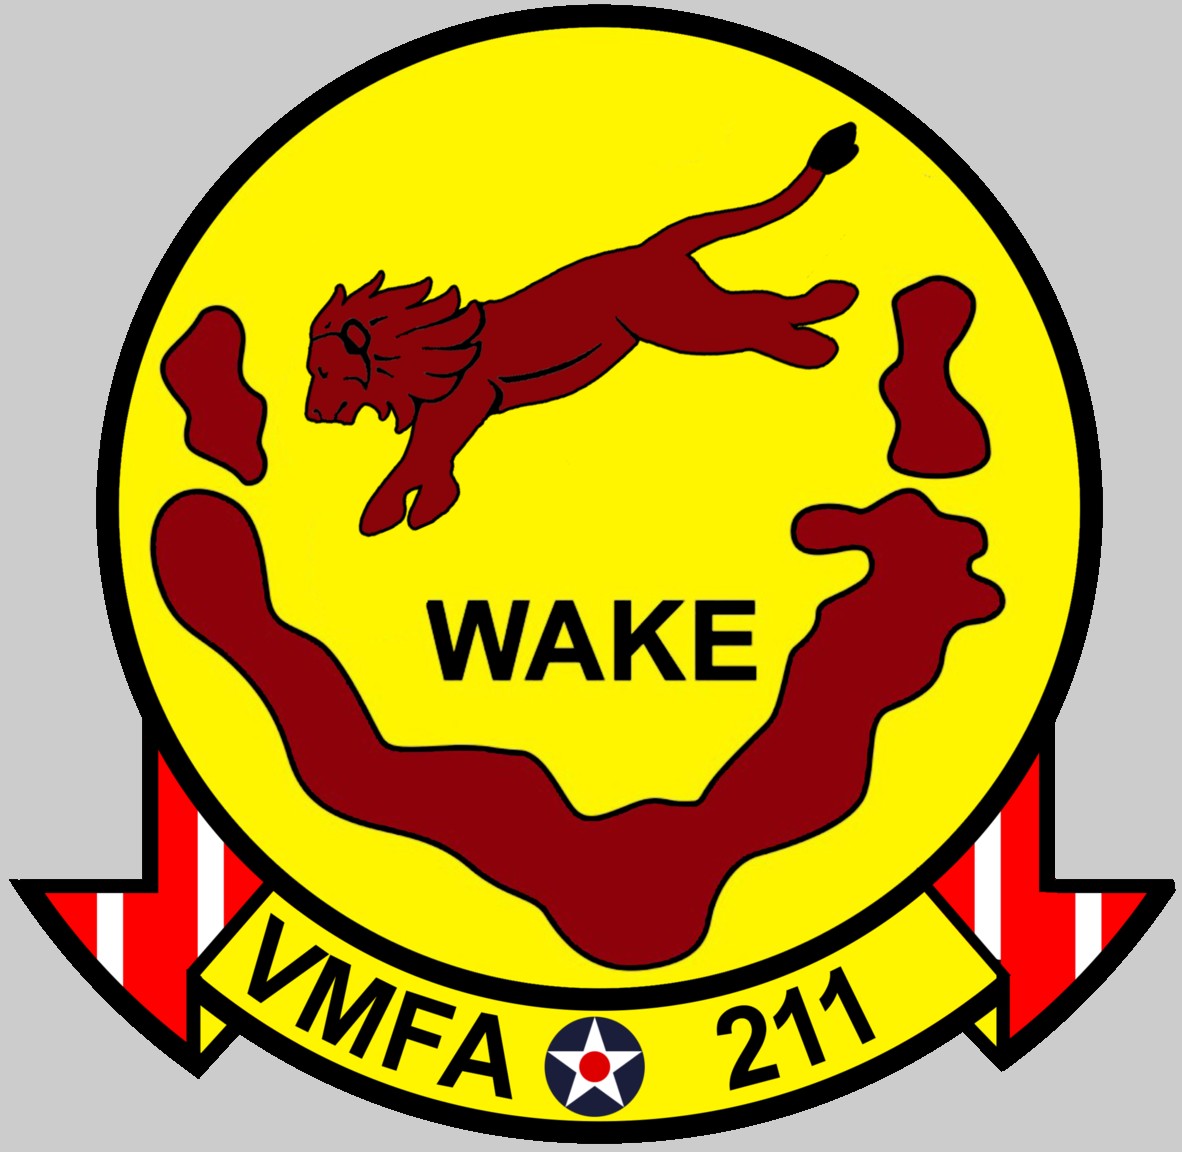 vmfa-211 wake island avengers insignia crest patch badge jsf marine fighter attack squadron usmc 02cr